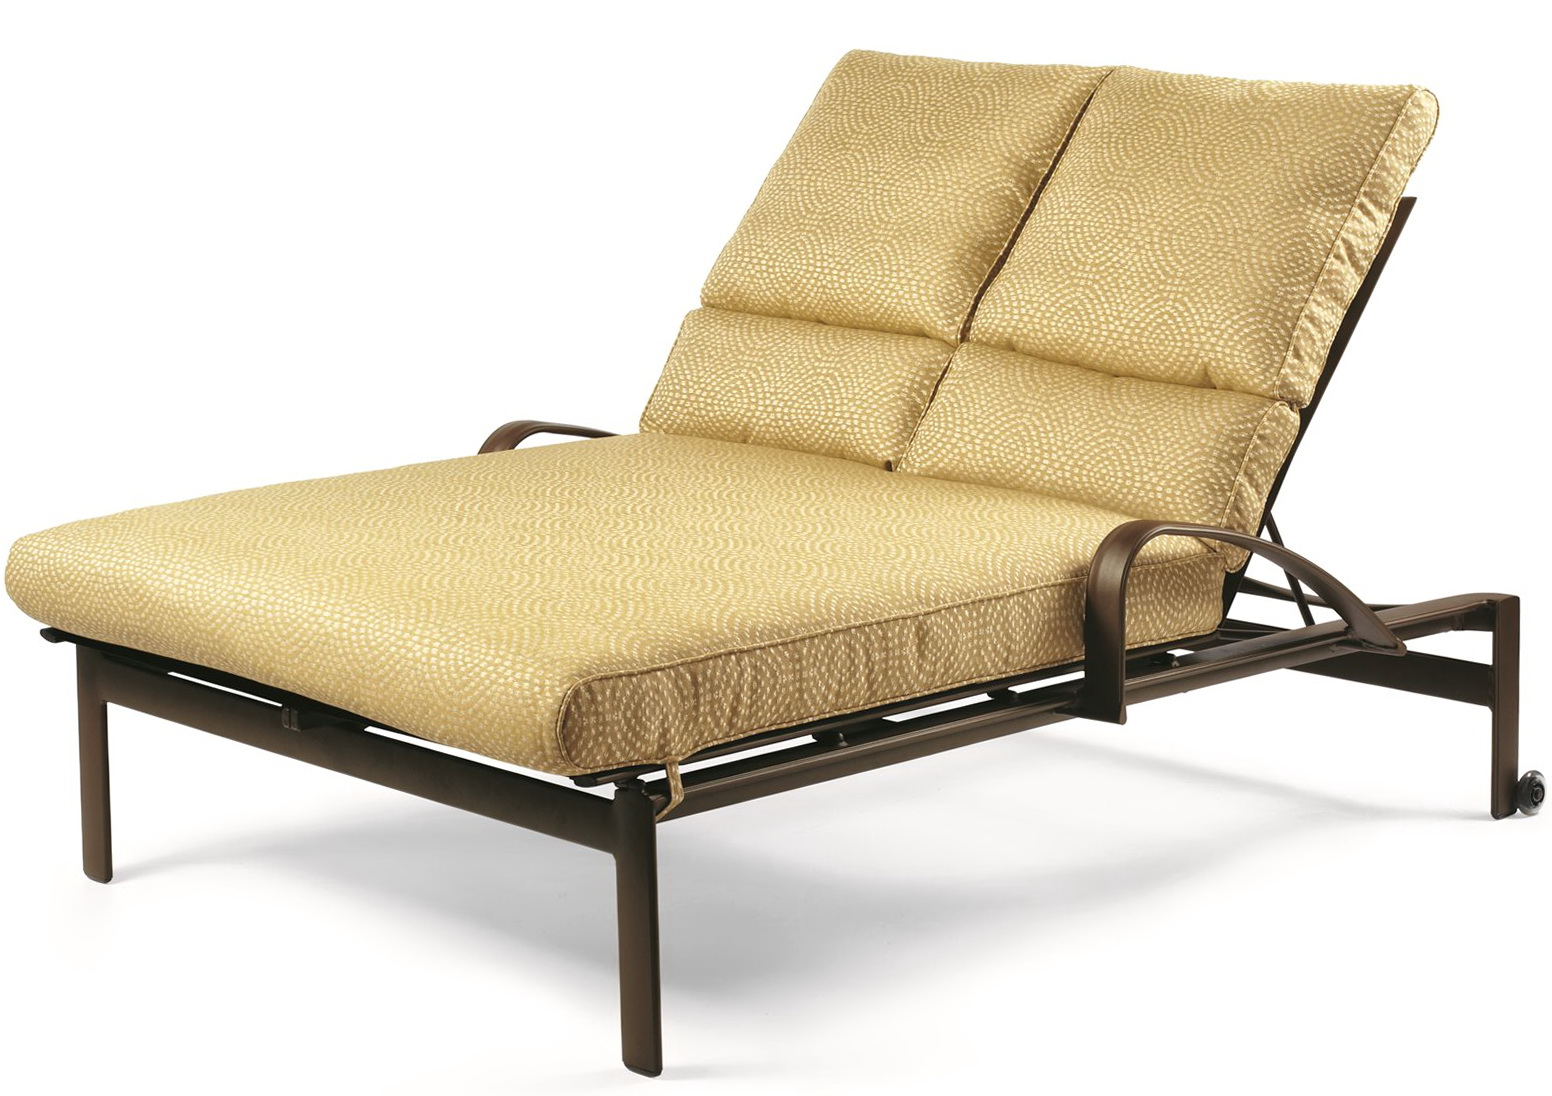 Double Chaise Lounge Cushions Sale | Home Design Ideas